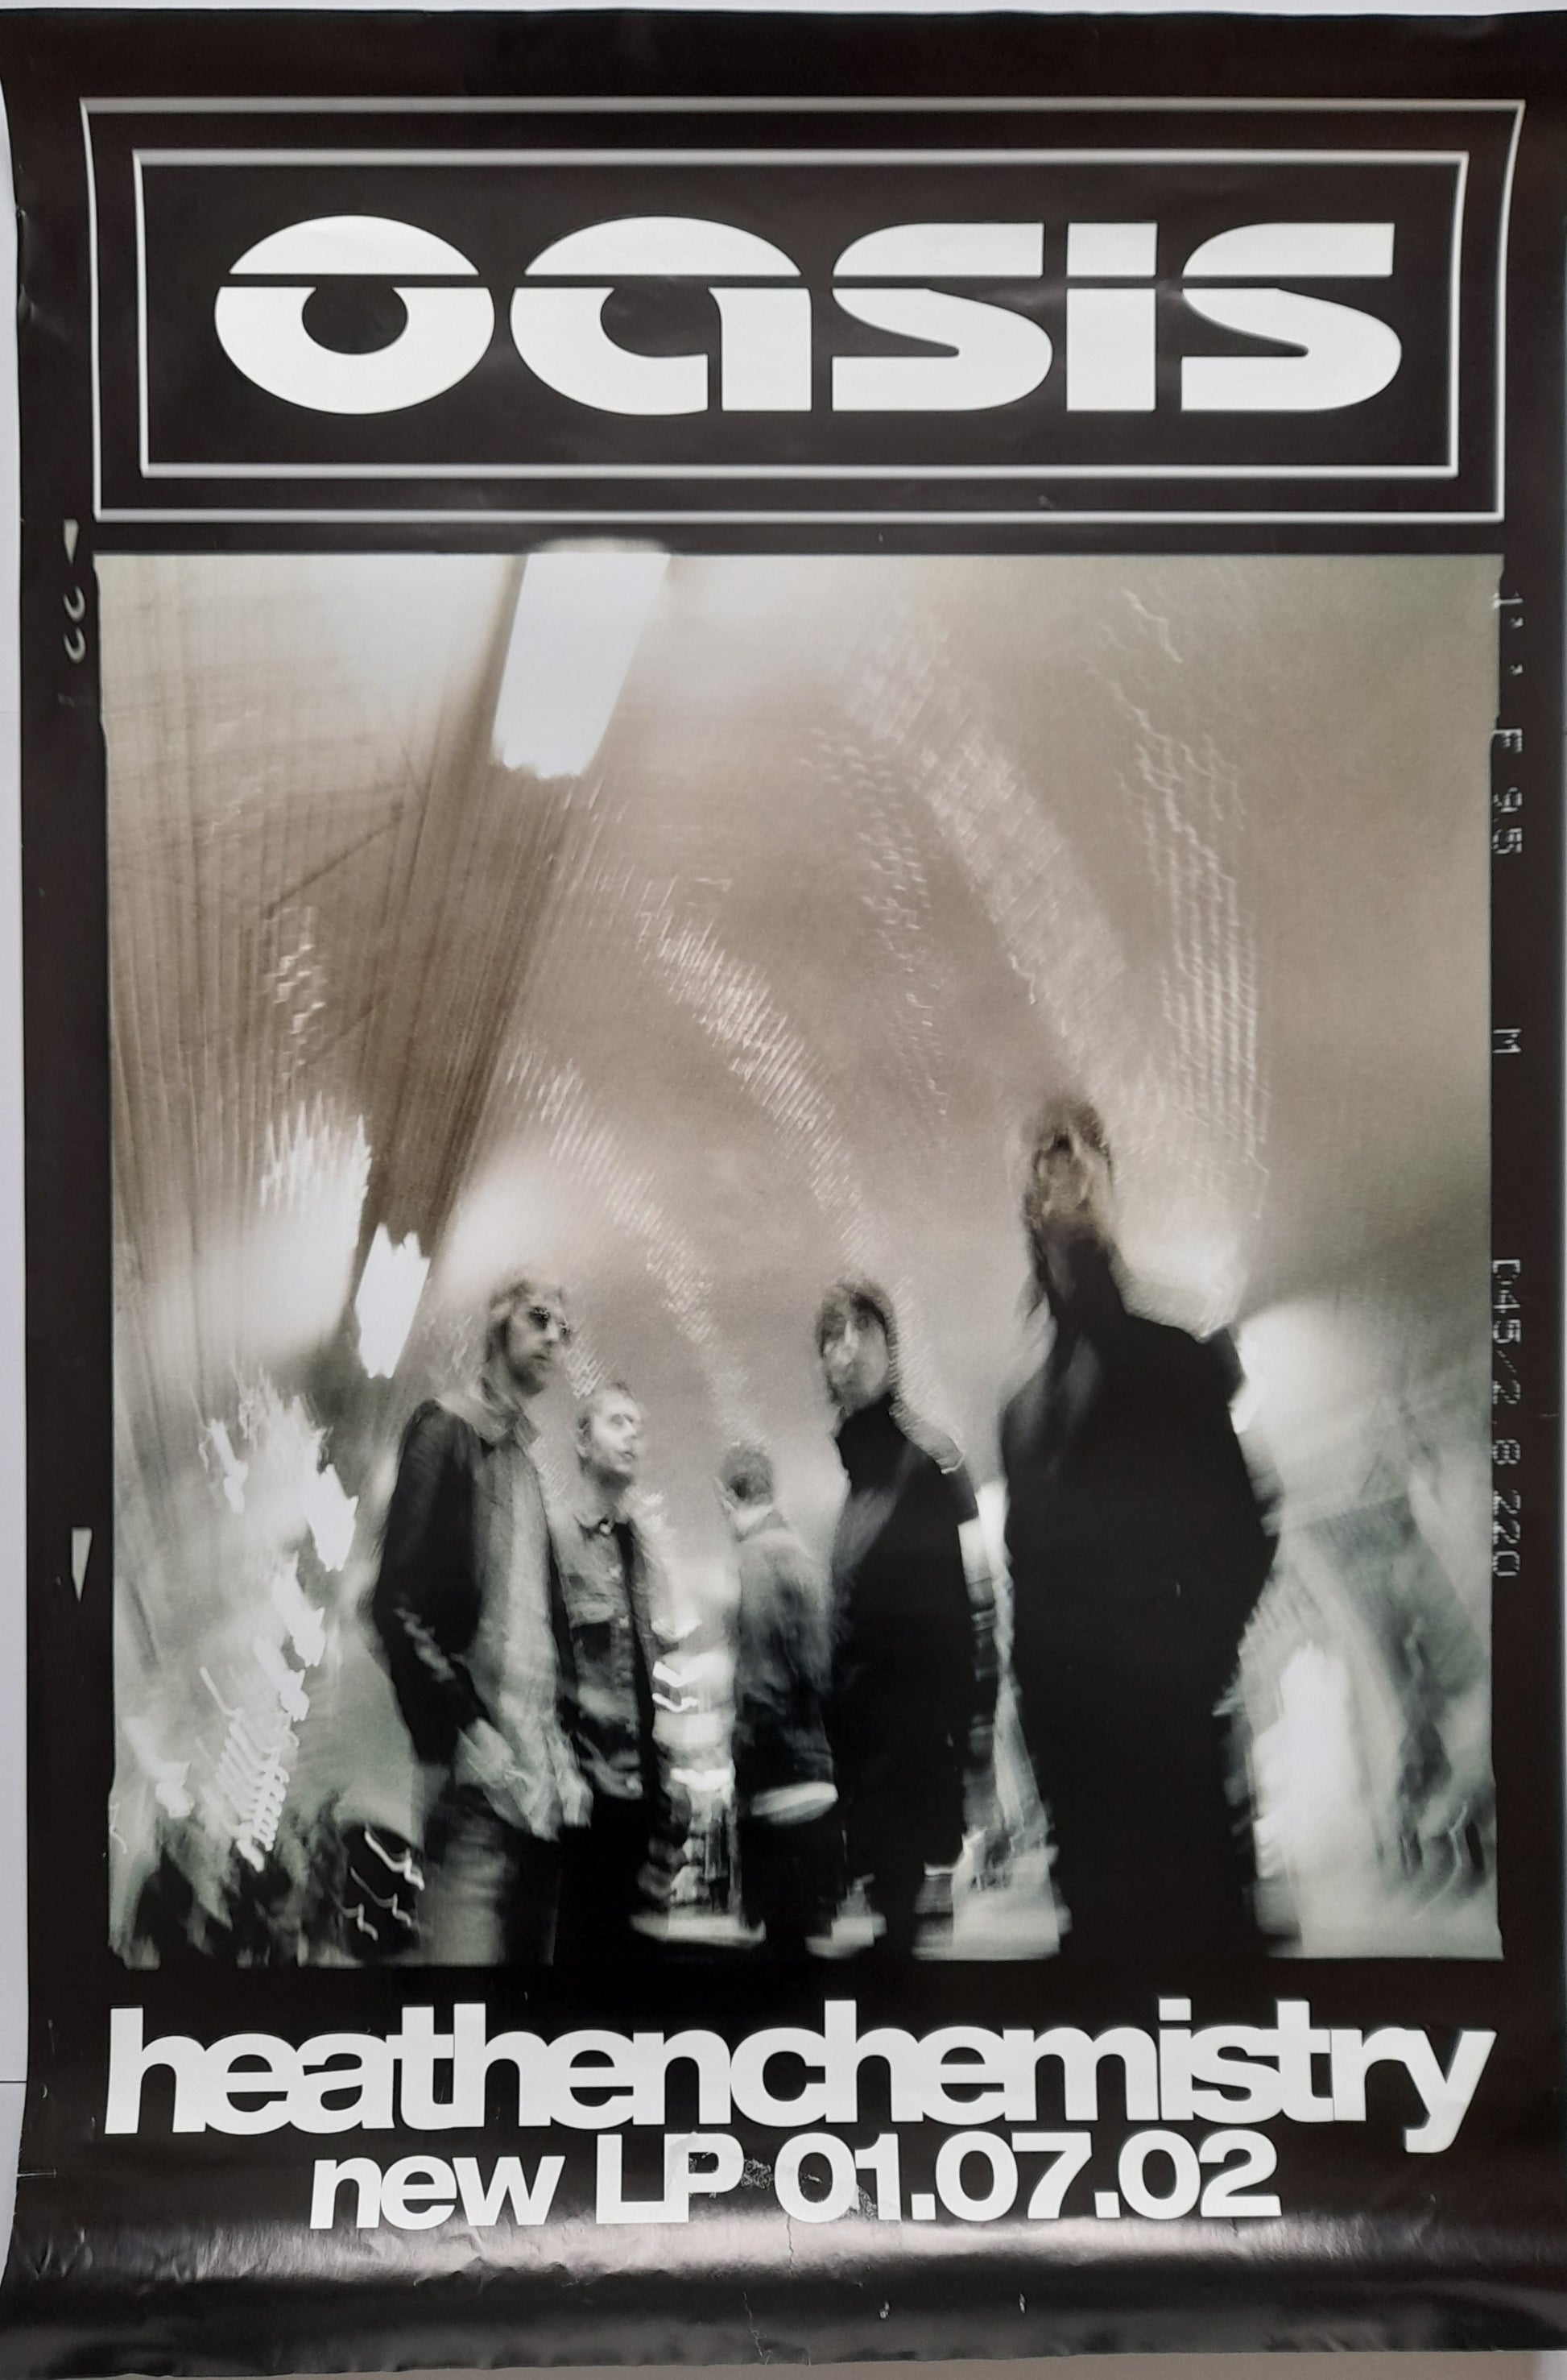 Oasis Heathen Chemistry LP Promotional Poster - RewindPressPlay